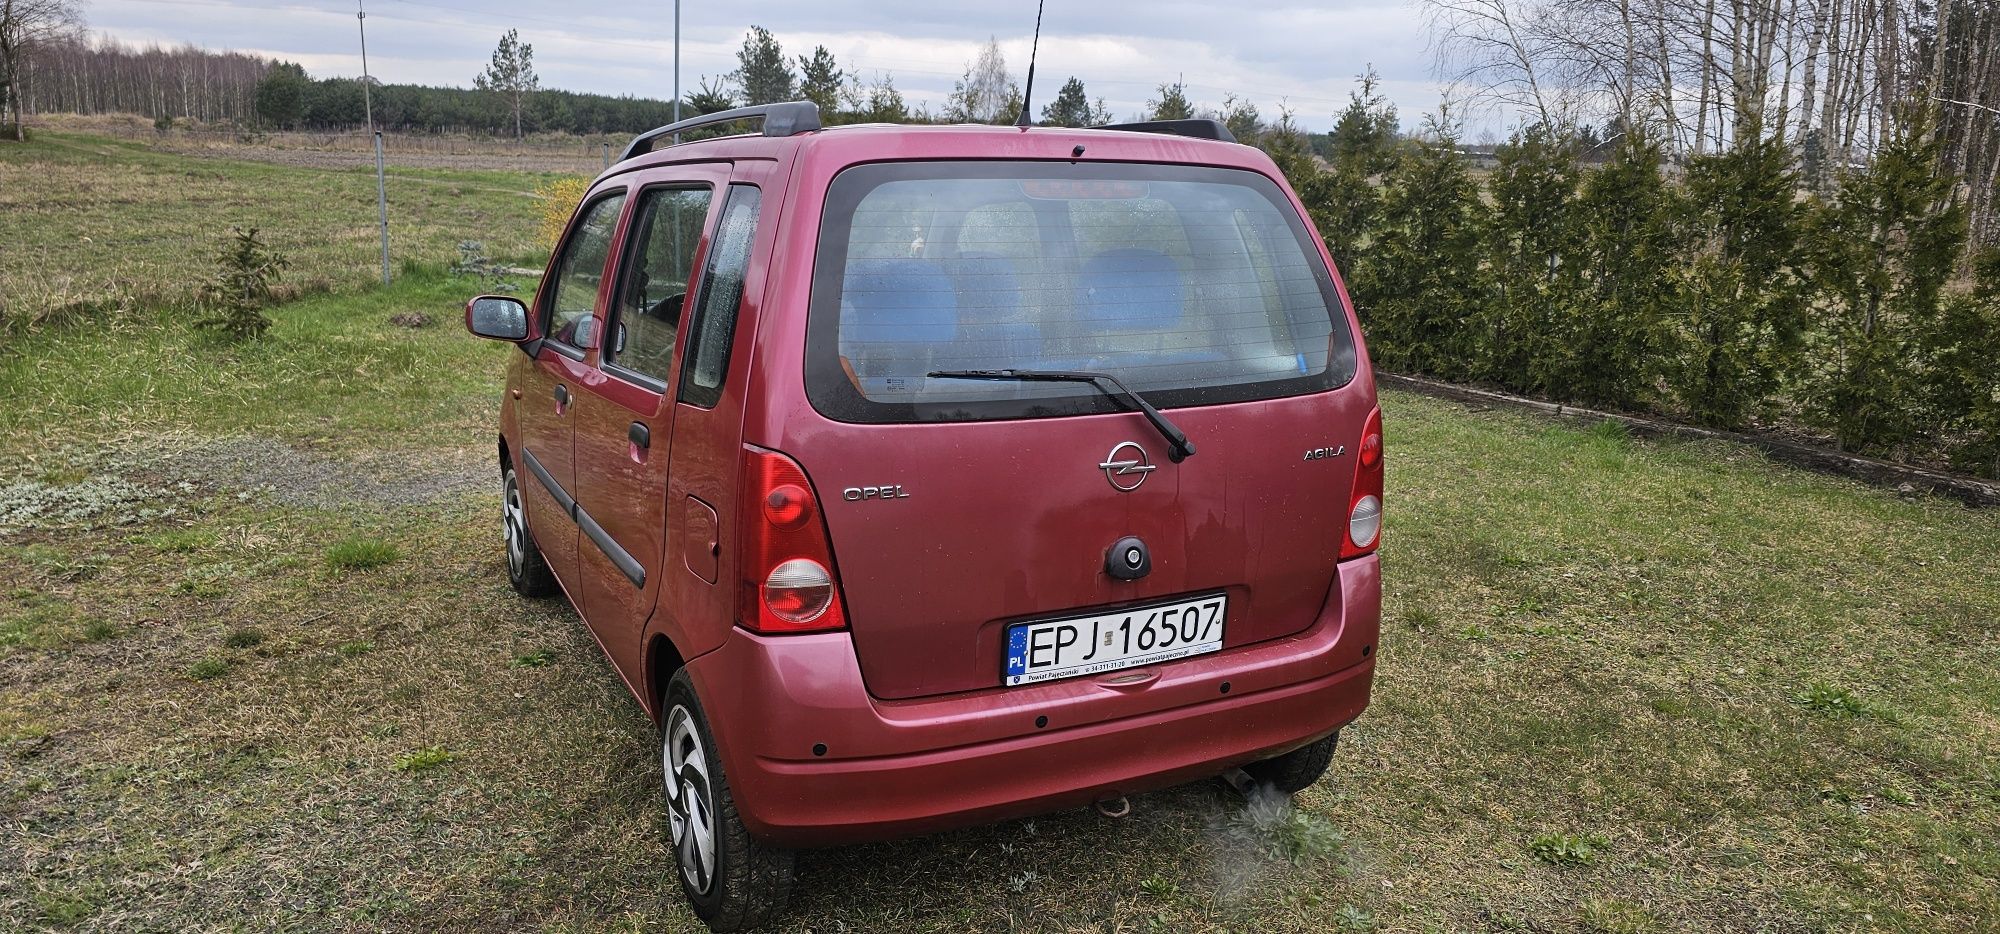 Opel Agila 1.0 2001 rok